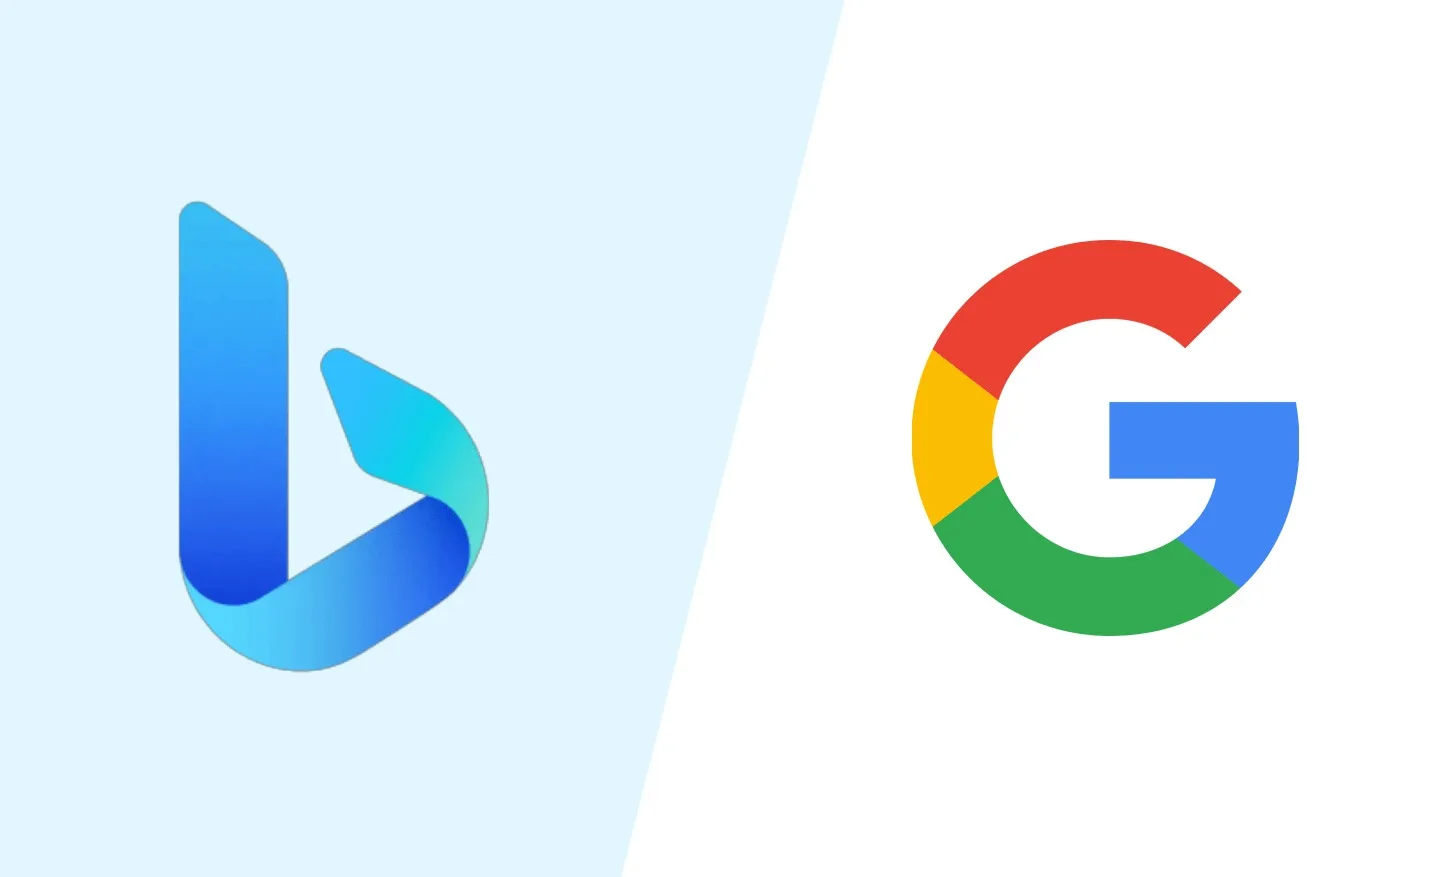 Google vs Bing : Qui dominera la recherche en ligne en 2024 ?